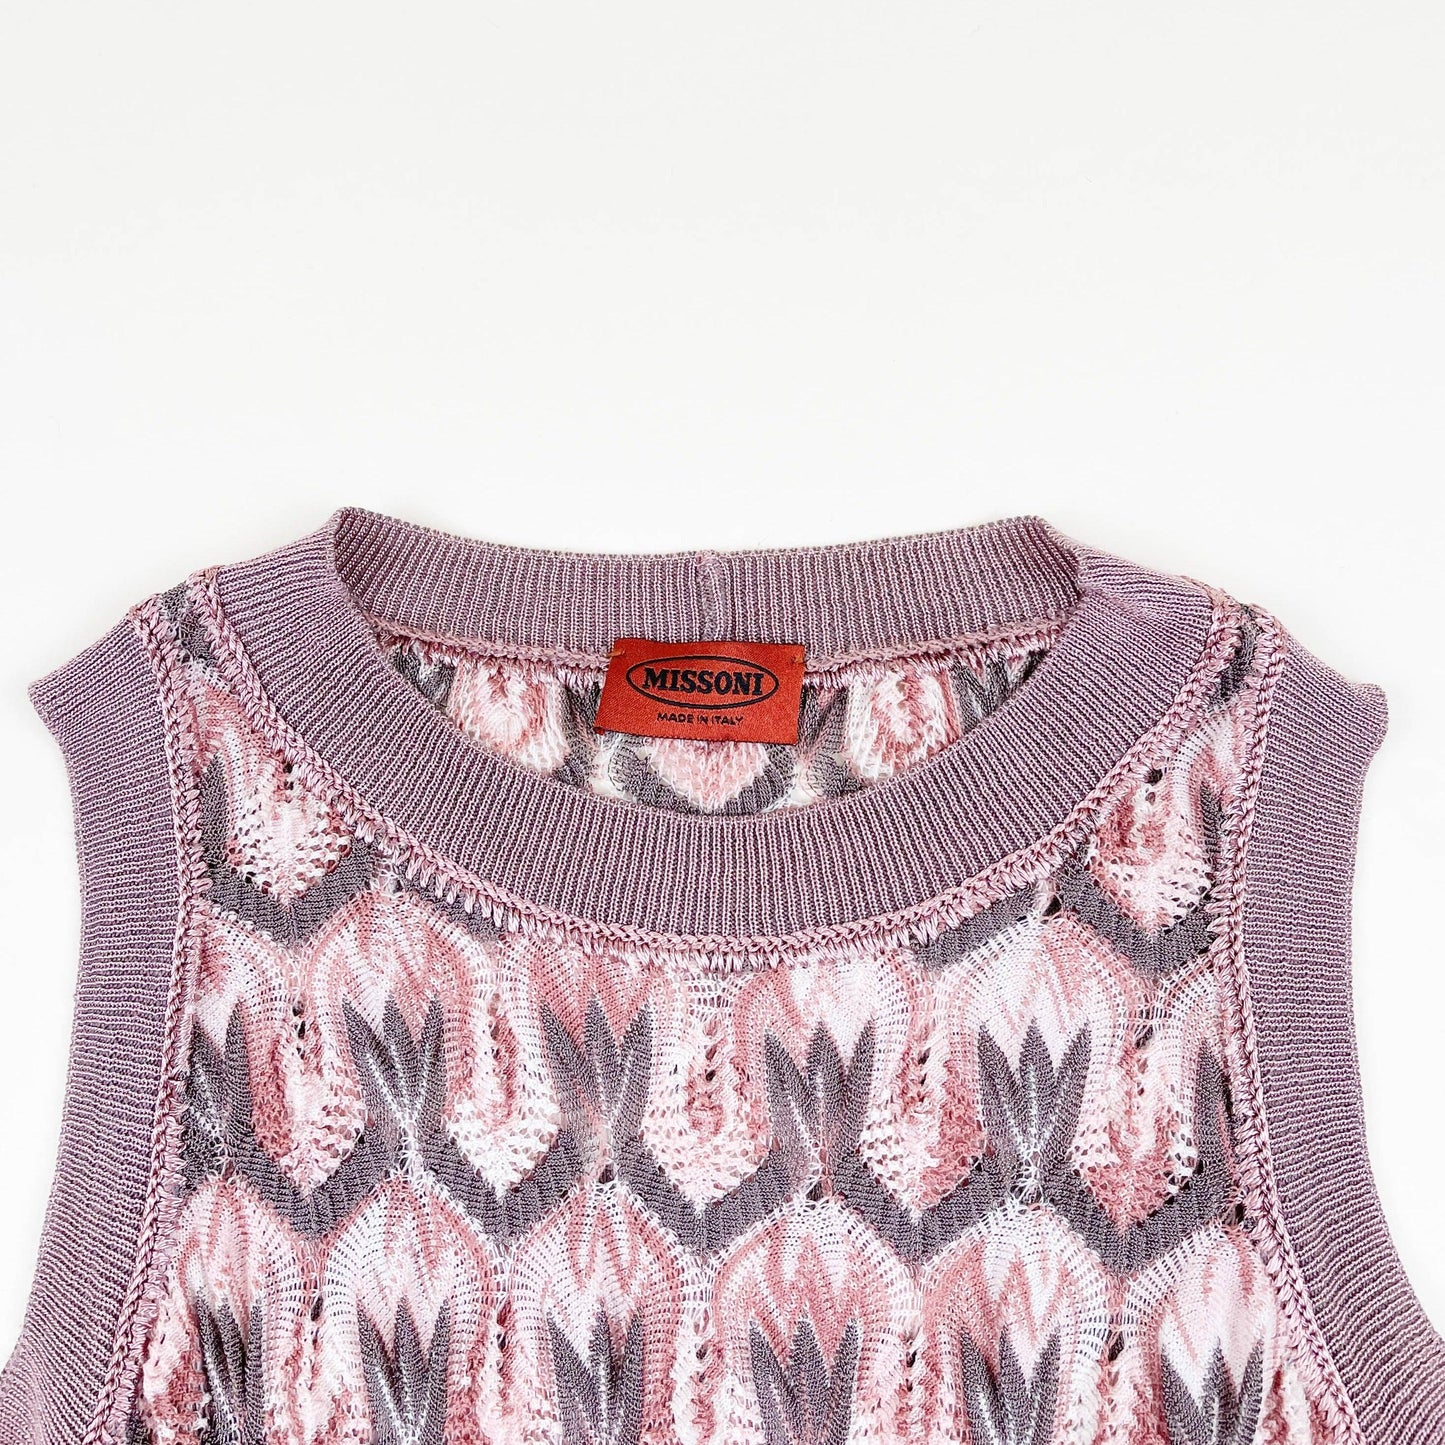 Vintage Missoni Sweater Vest (M) - Known Source